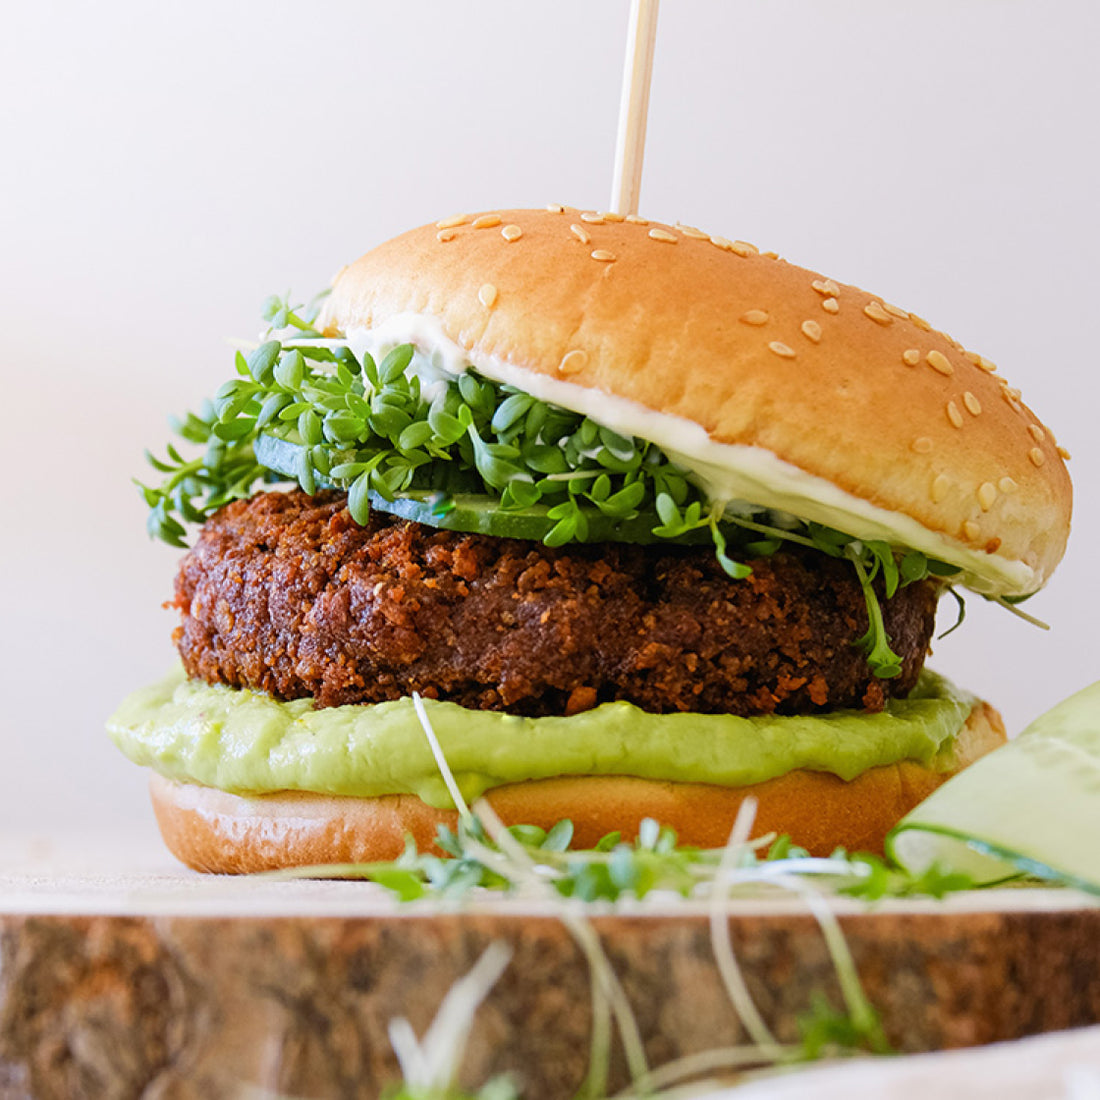 Easy To Mix vegane Burger